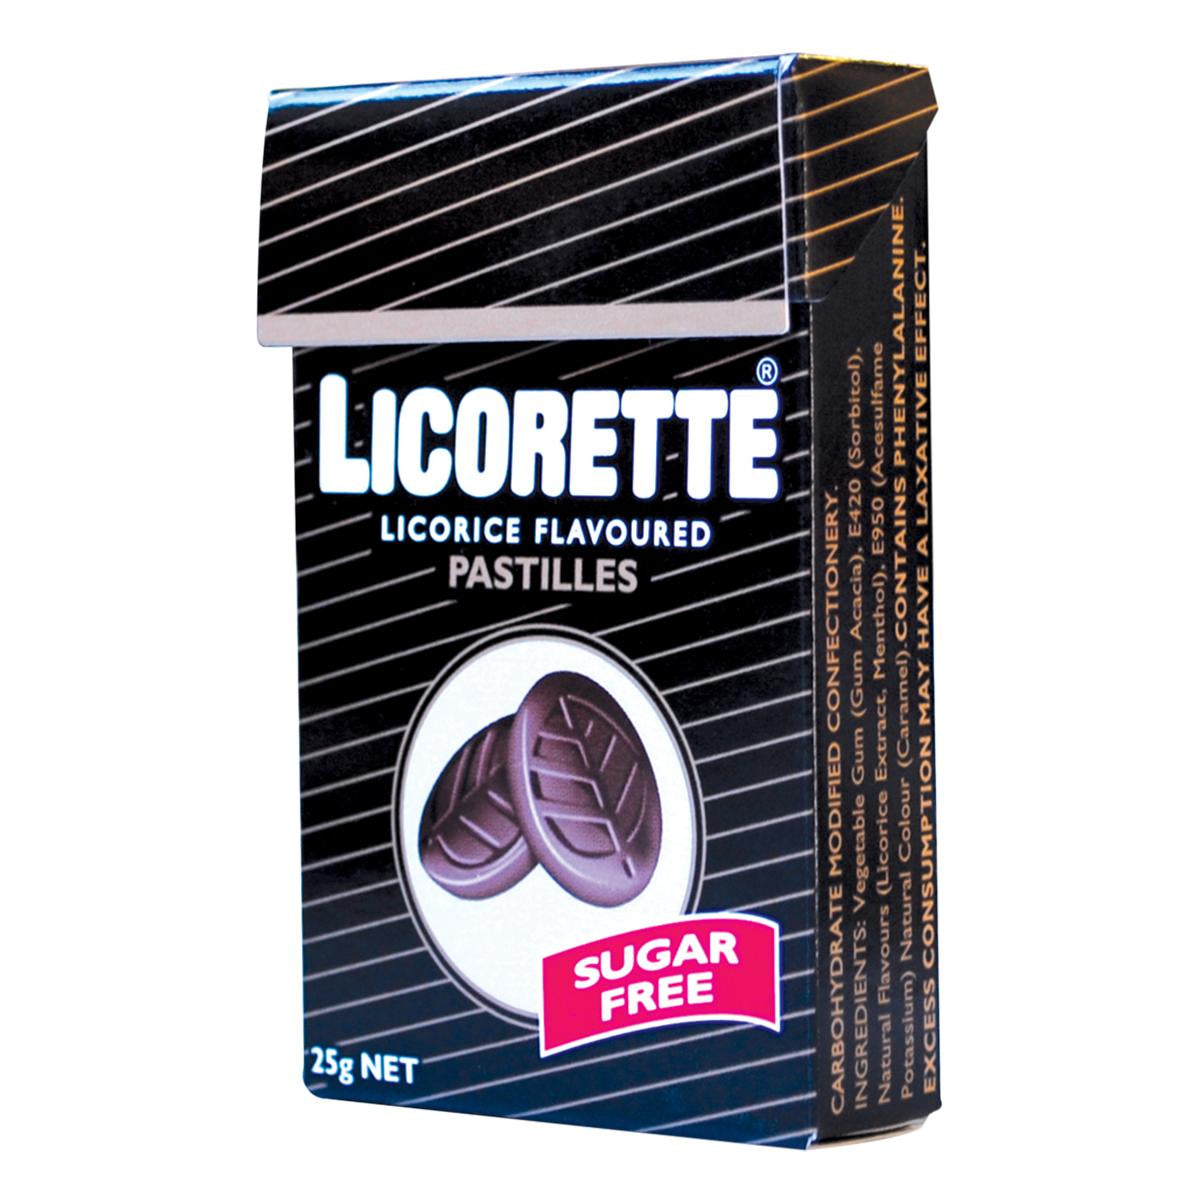 Primary image of Licorette Licorice Flavored Pastilles